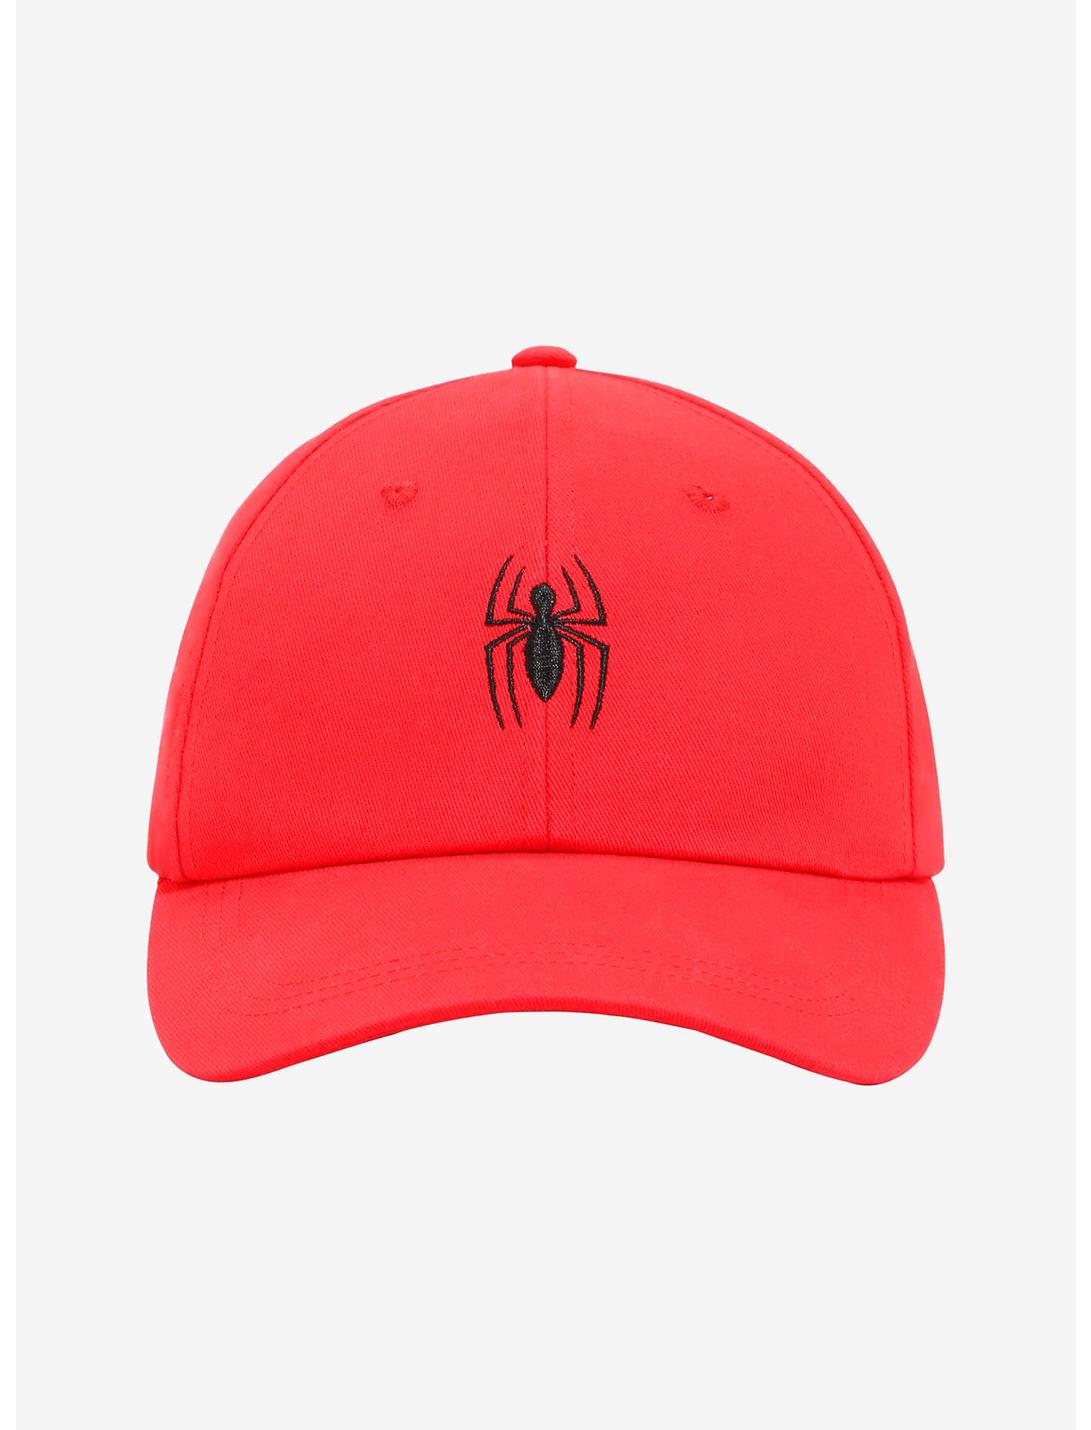 Marvel Spider-Man Spider Logo Cap - BoxLunch Exclusive, , hi-res